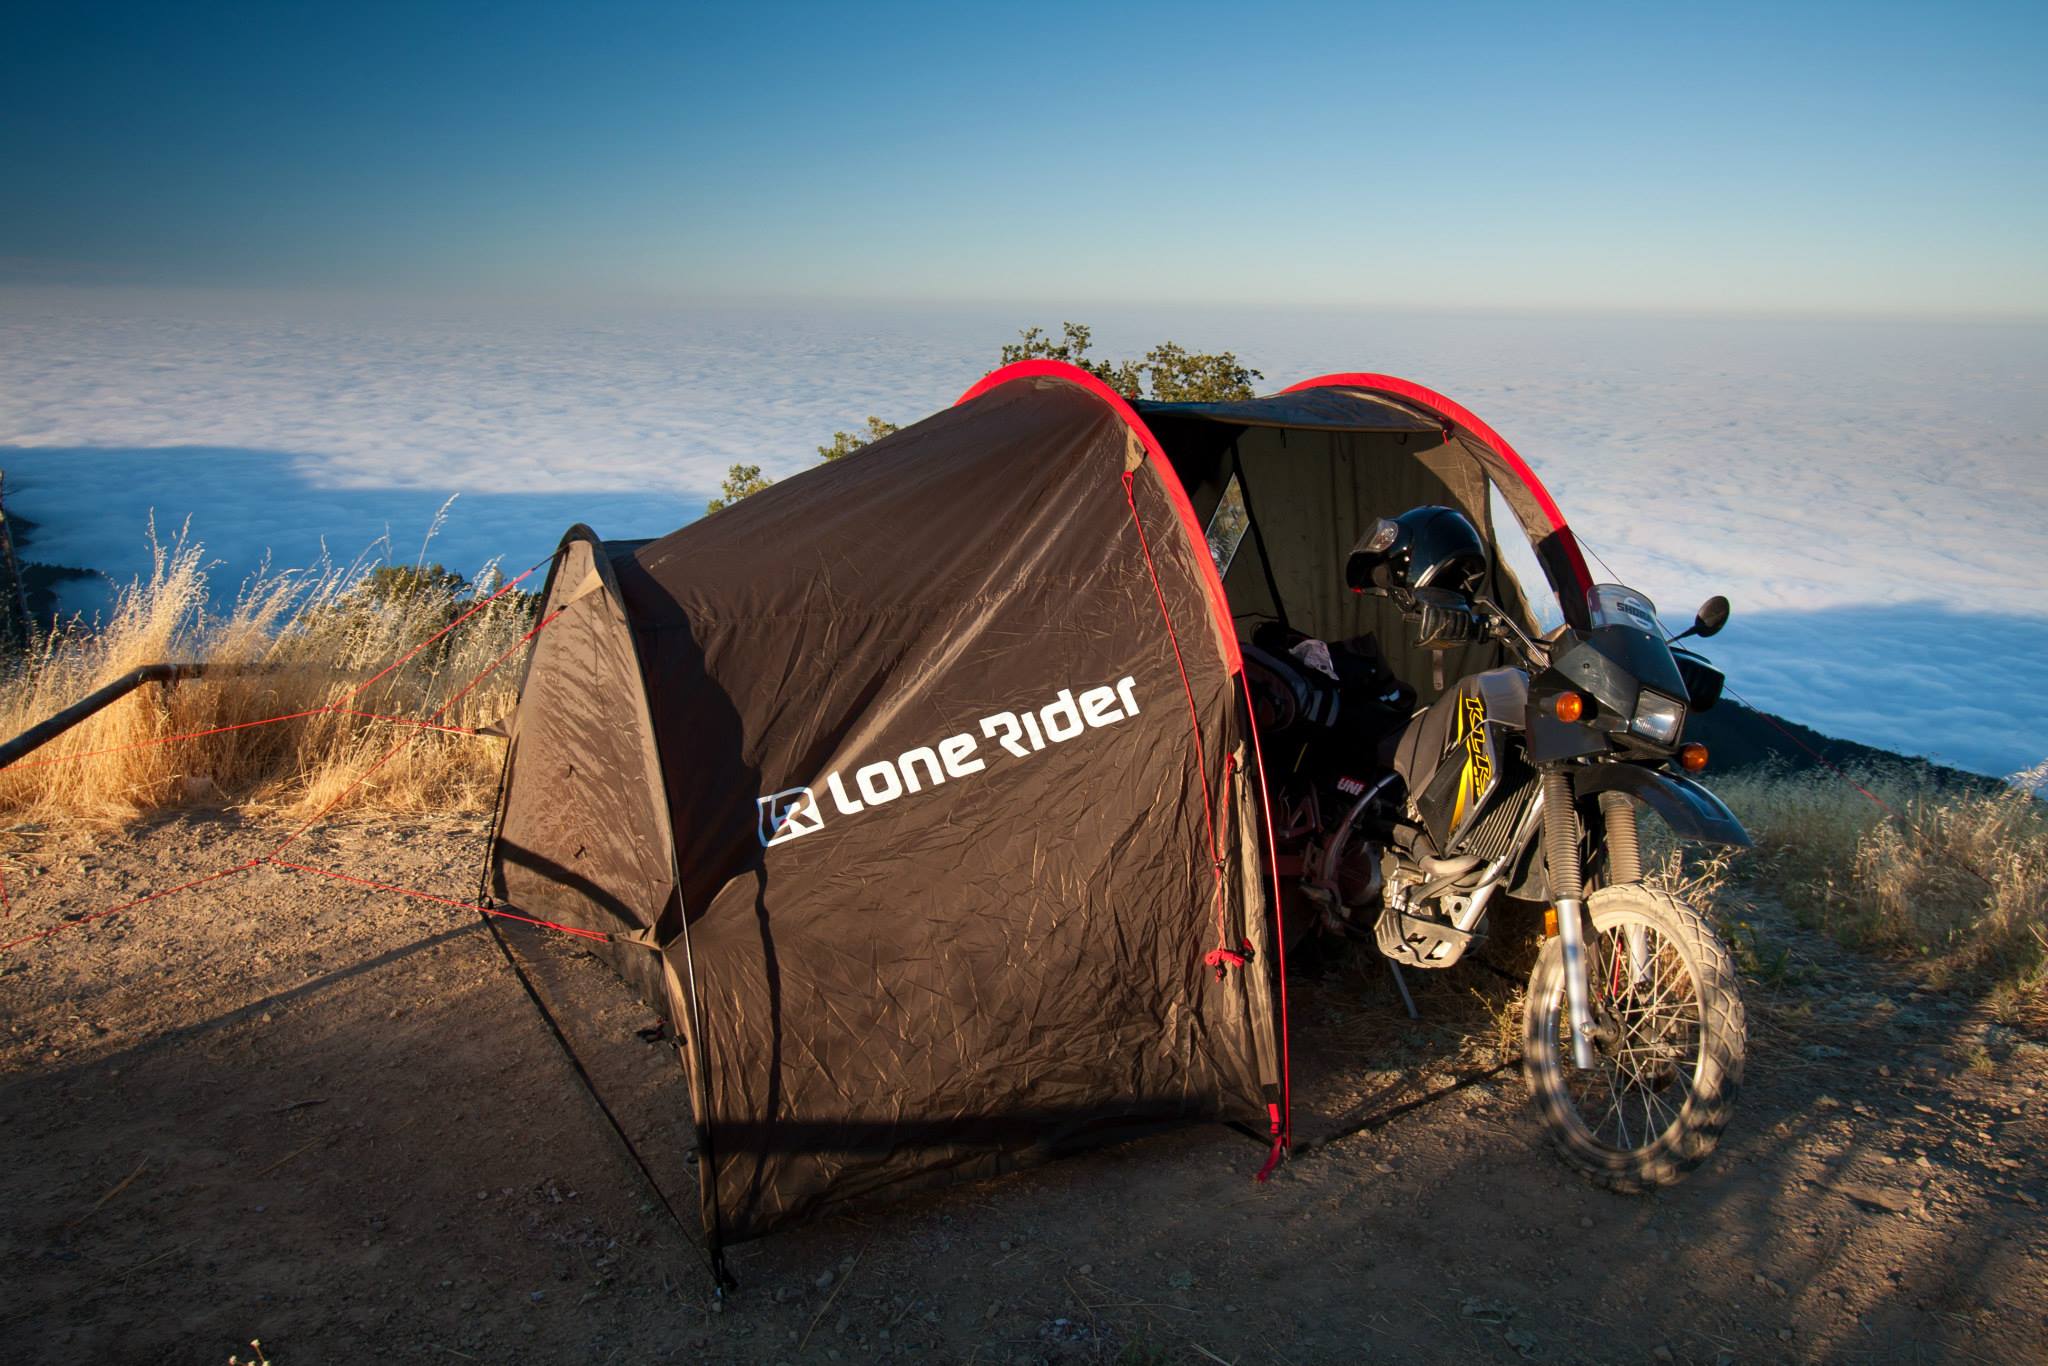 Motorcycle camping tips - photo by Lone Rider MotoTent v2 customer